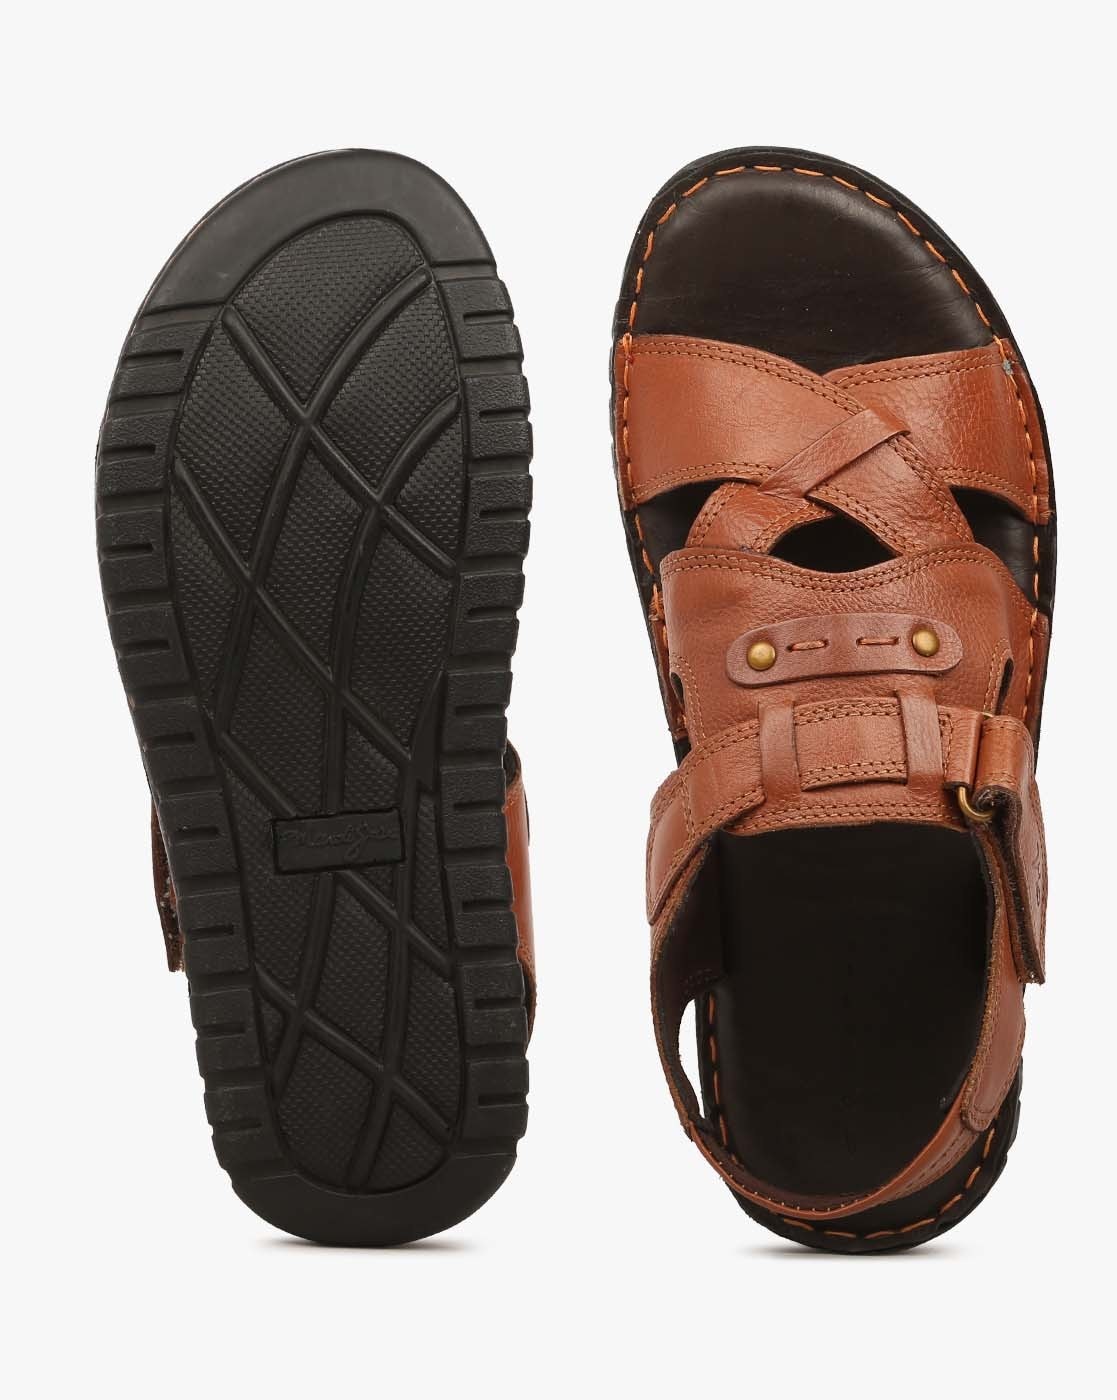 MARDI GRAS Men's Leather Sandals in Brown | Double Strap Closure | PU Sole,  Leather Lining, Texon Insole, EVA/FOAM Midsole | Brass Antique Trims :  Amazon.in: Fashion